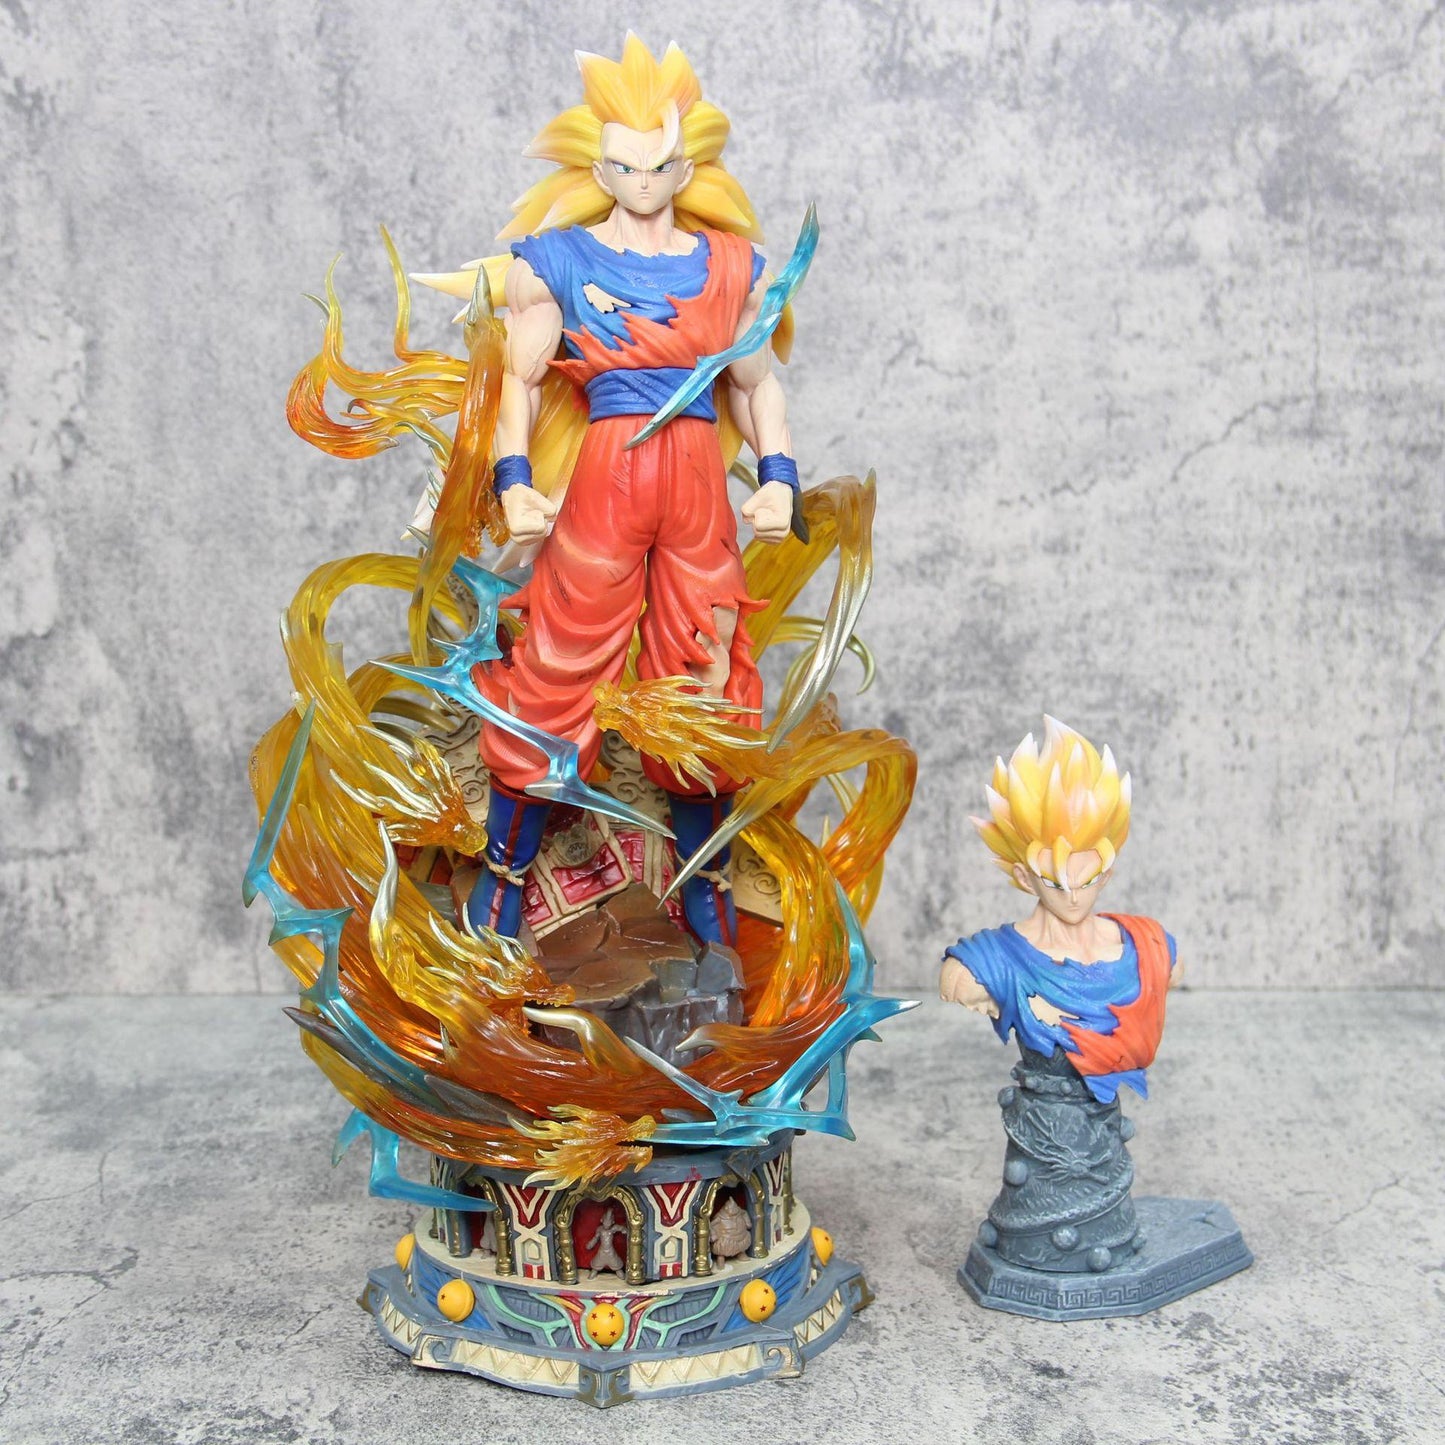 Super Tri Goku Super Saiyan Double Headed Statue Boxed Figure Model Ornament